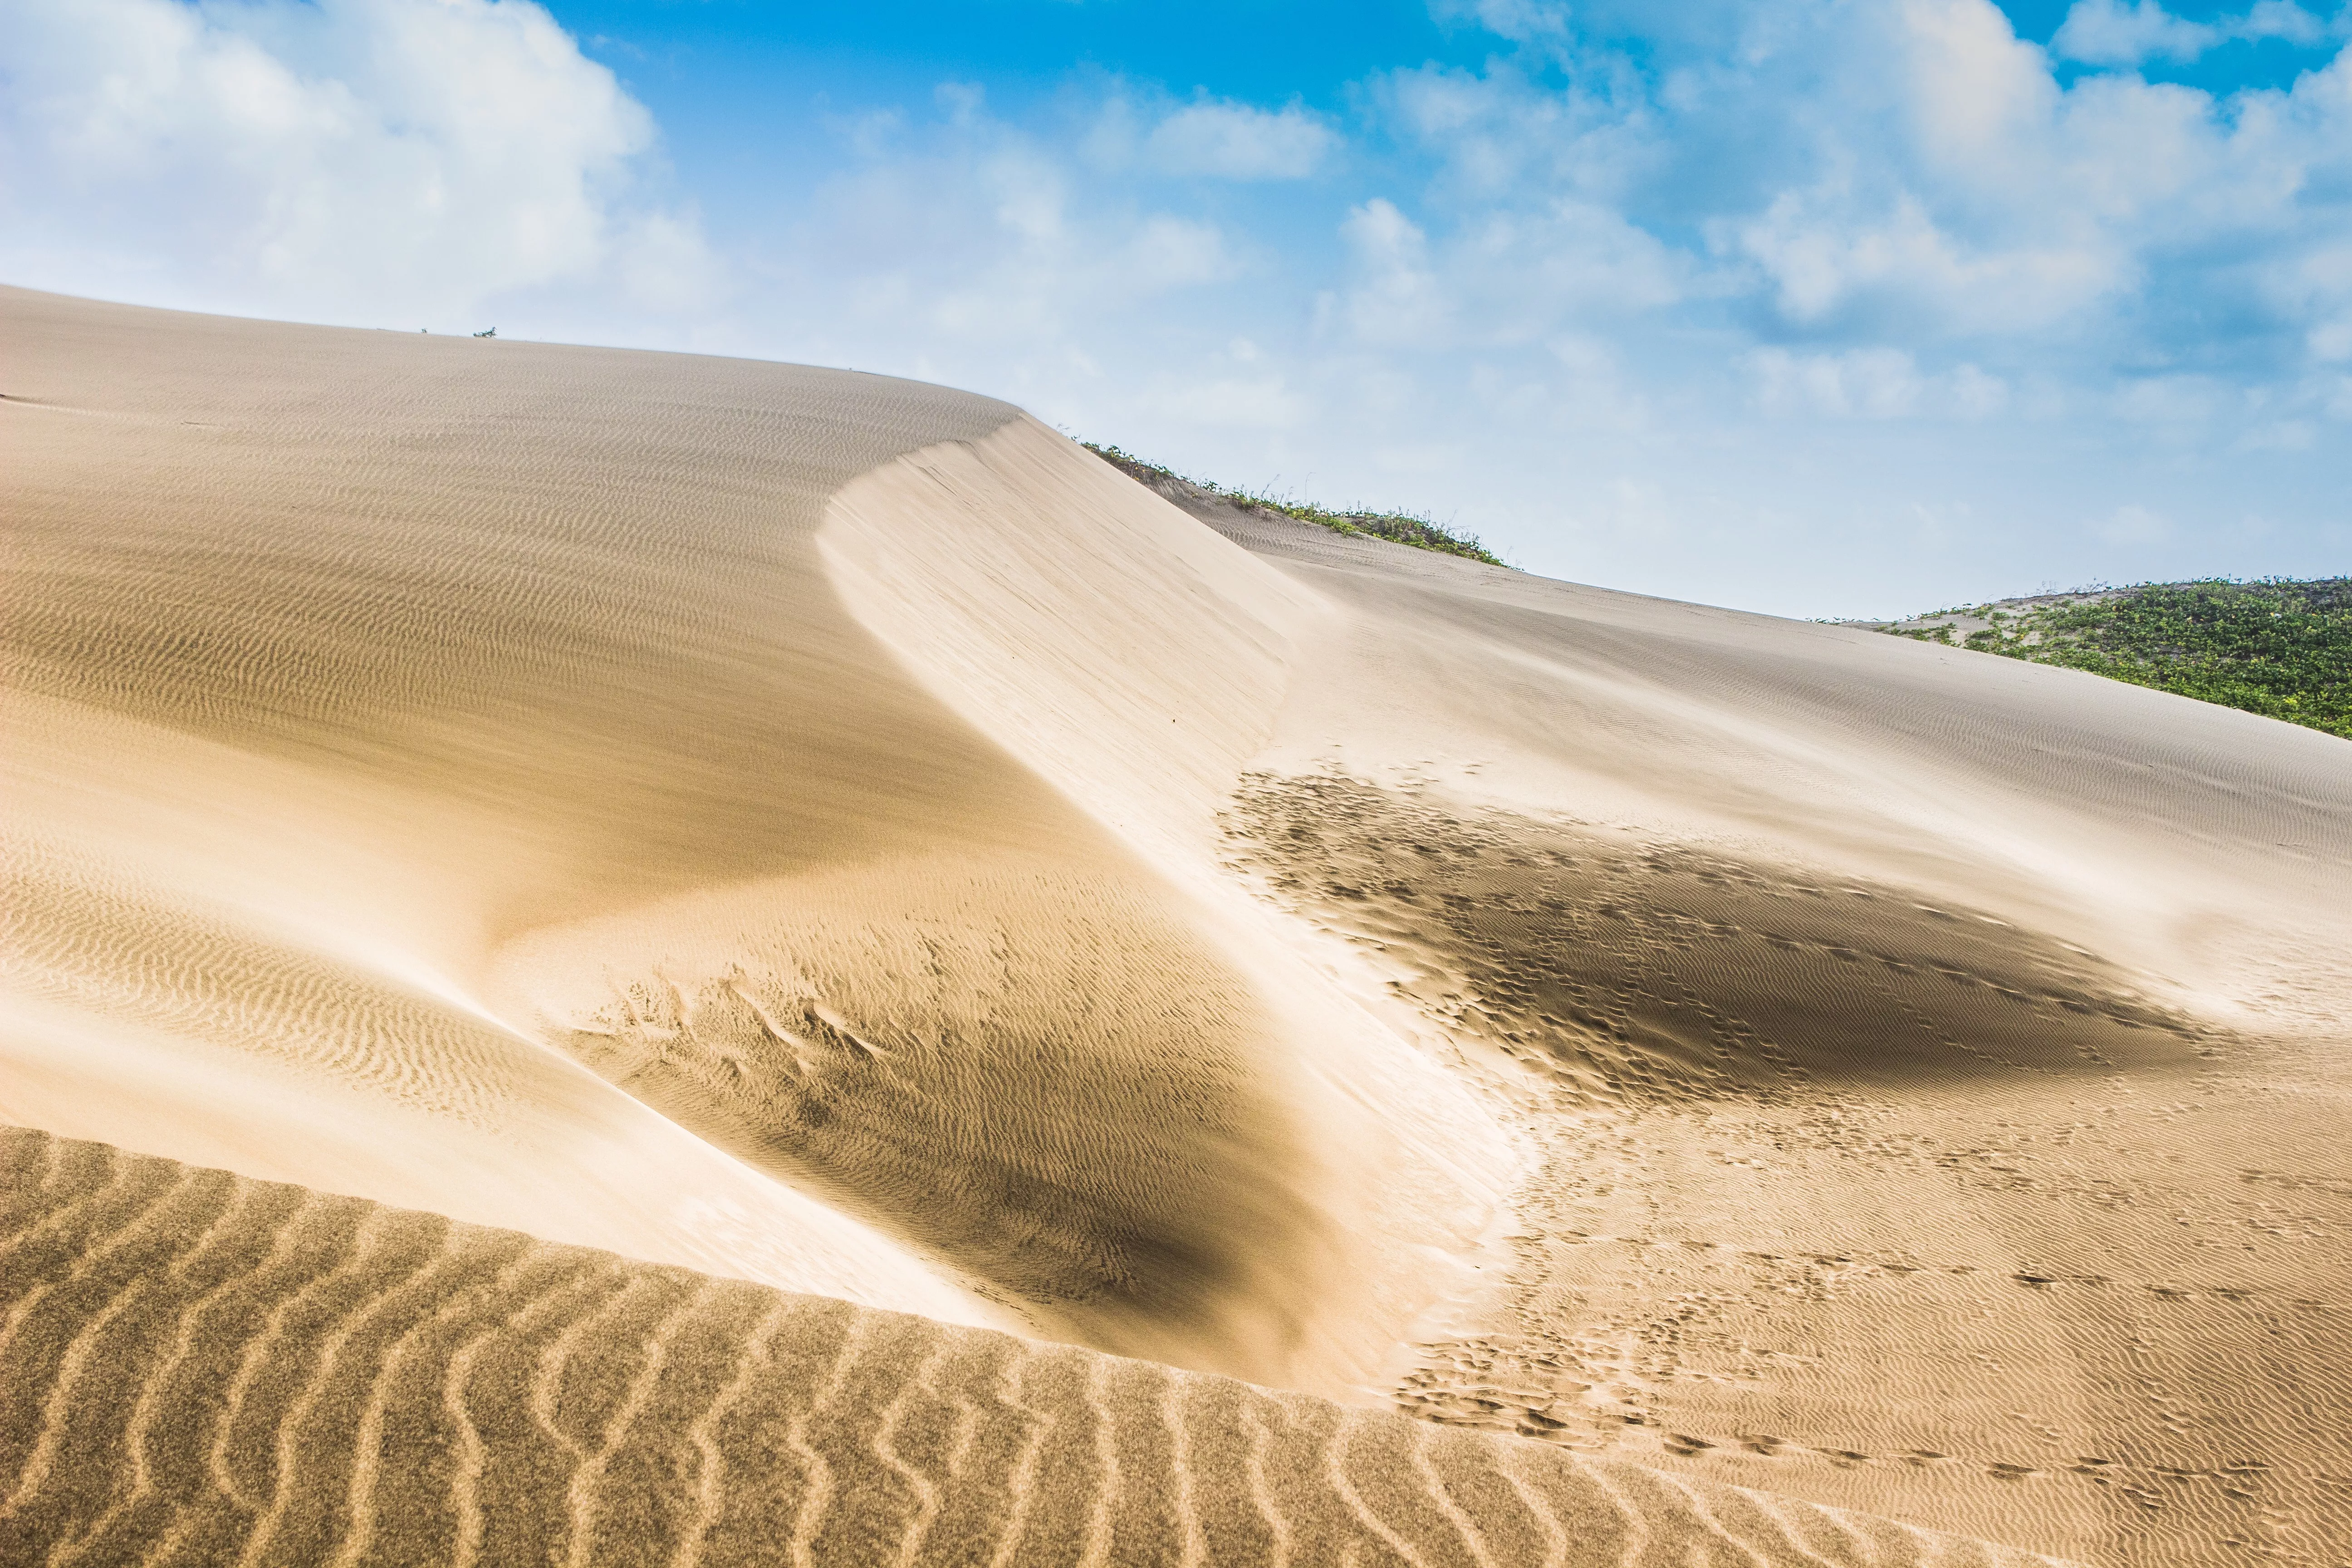 Sigatoka Sand Dunes Walk in Fiji, Australia and Oceania | Deserts,Trekking & Hiking - Rated 3.7